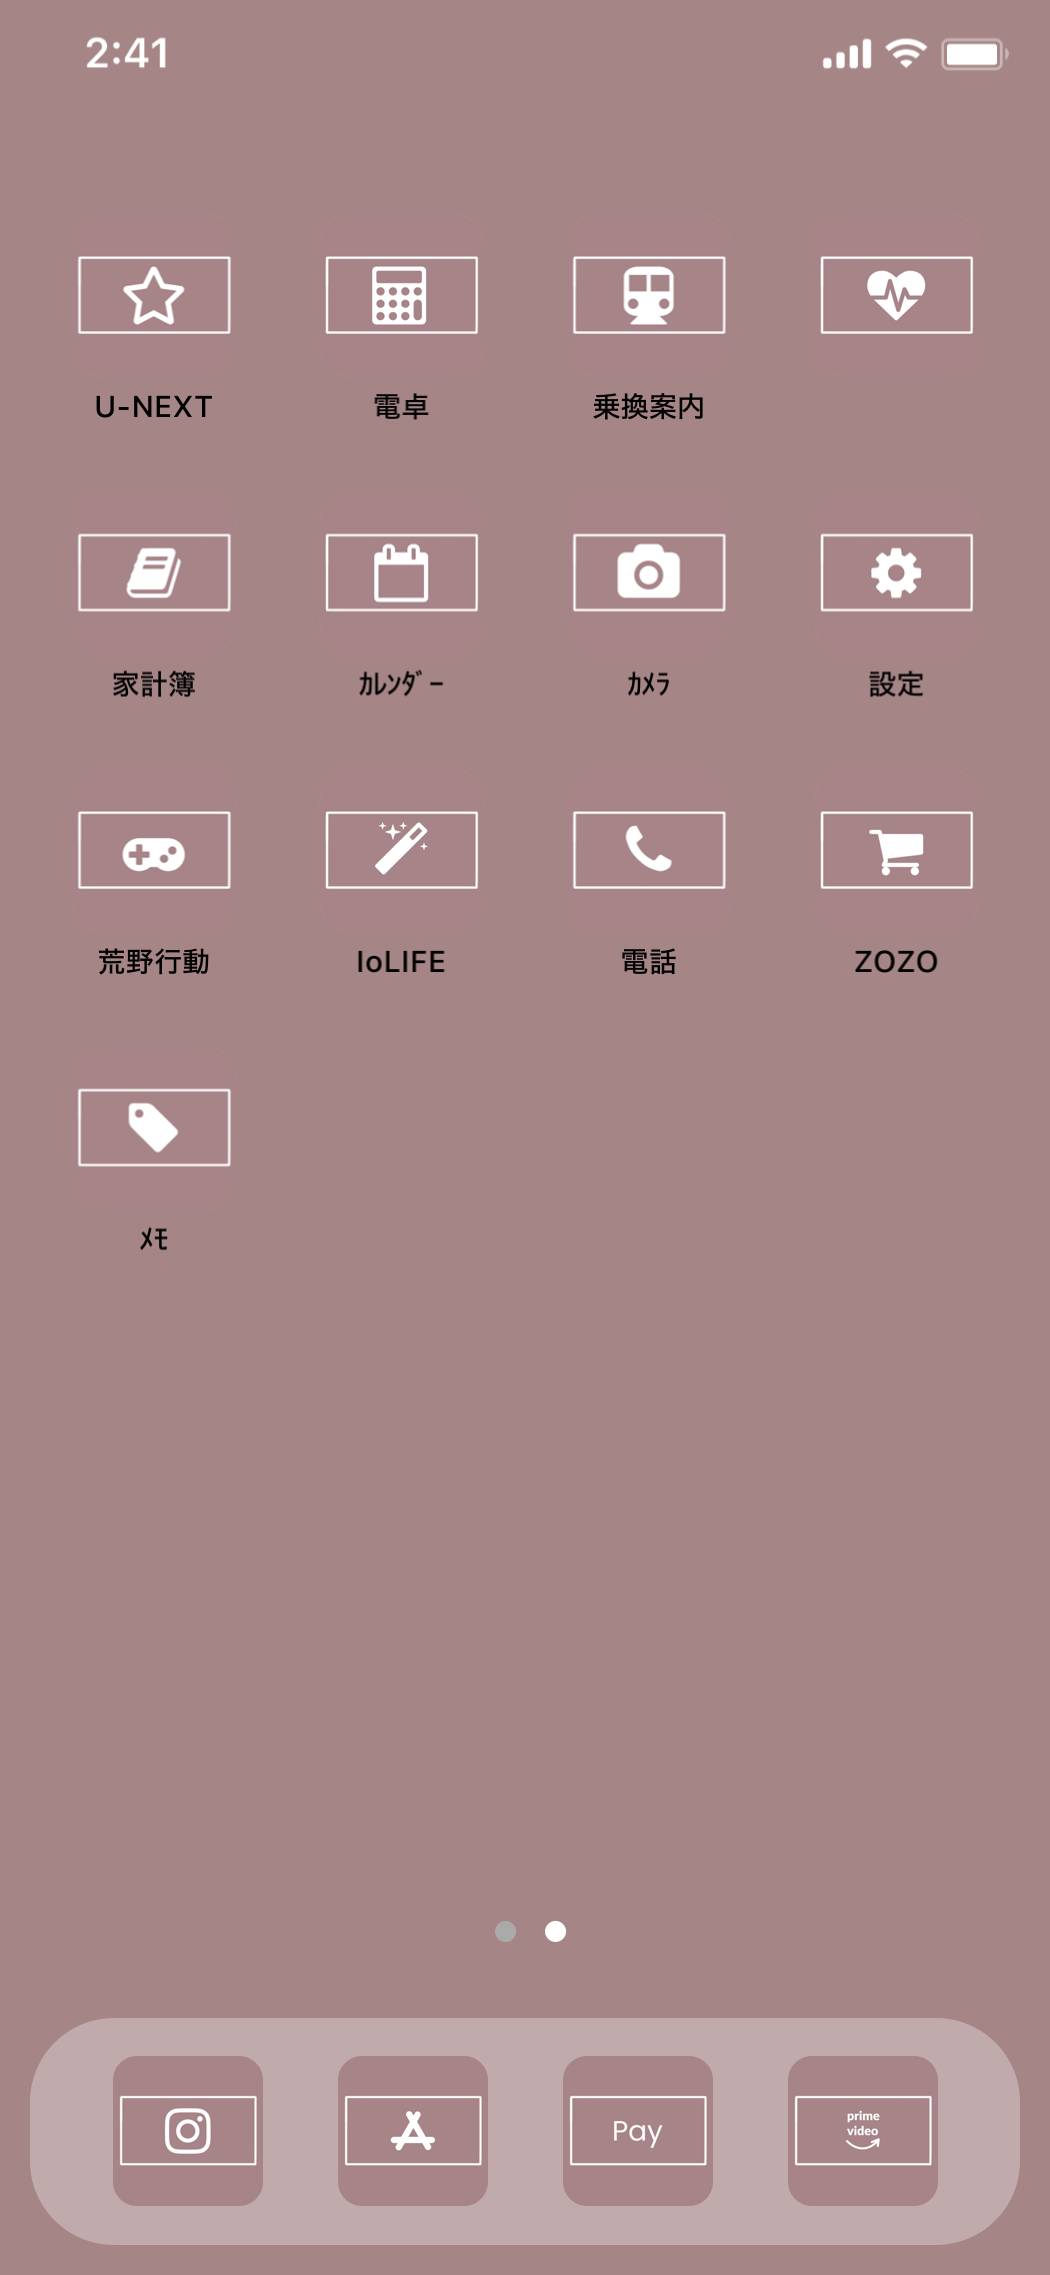 大人ピンク♥︎Ideeën voor het startscherm[fKUu4wmkLWH5oyh7tqh8]